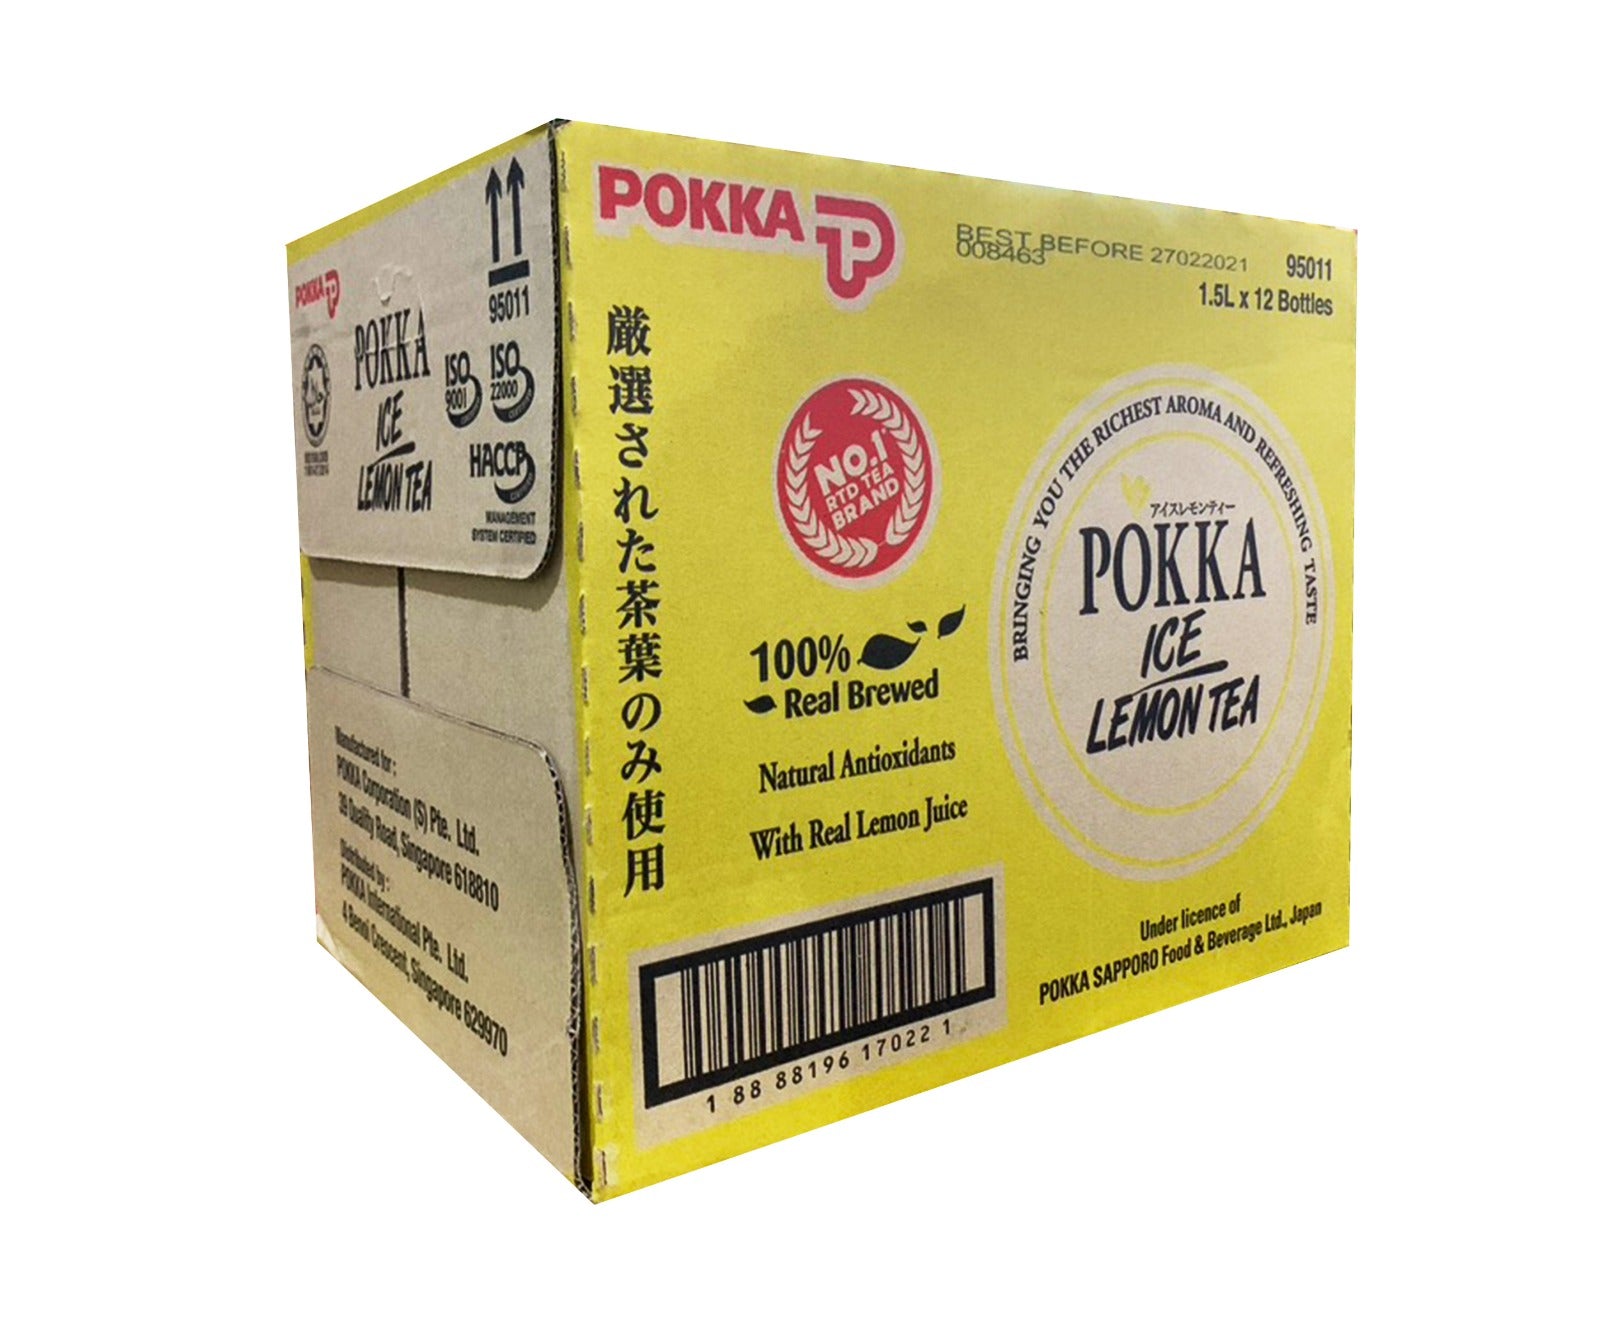 Pokka Lemon Tea Bottle (12 x 1.5L - Carton)